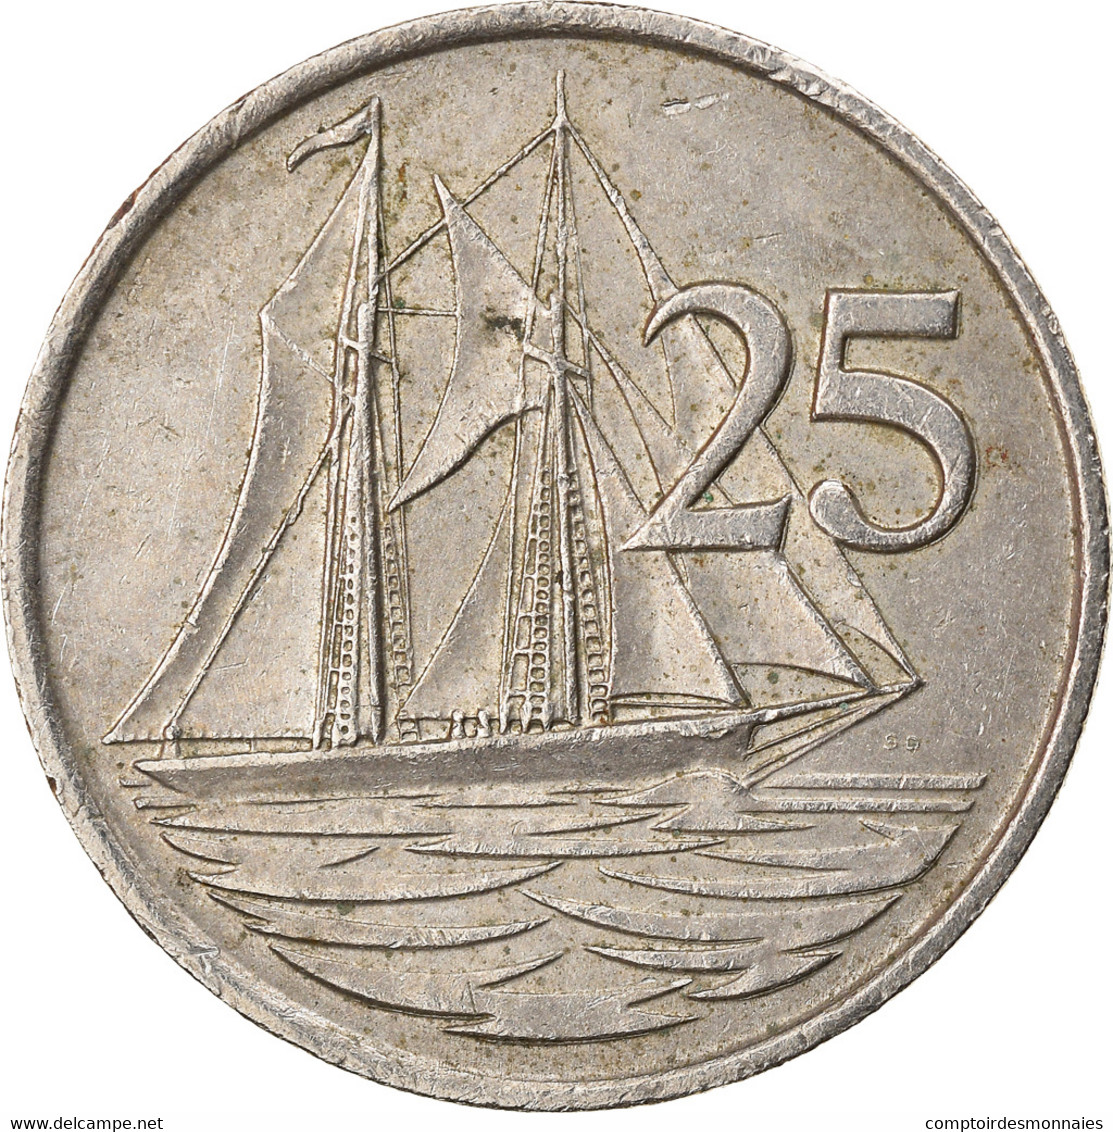 Monnaie, Îles Caïmans, 25 Cents, 1987, TTB, Copper-nickel, KM:90 - Caimán (Islas)